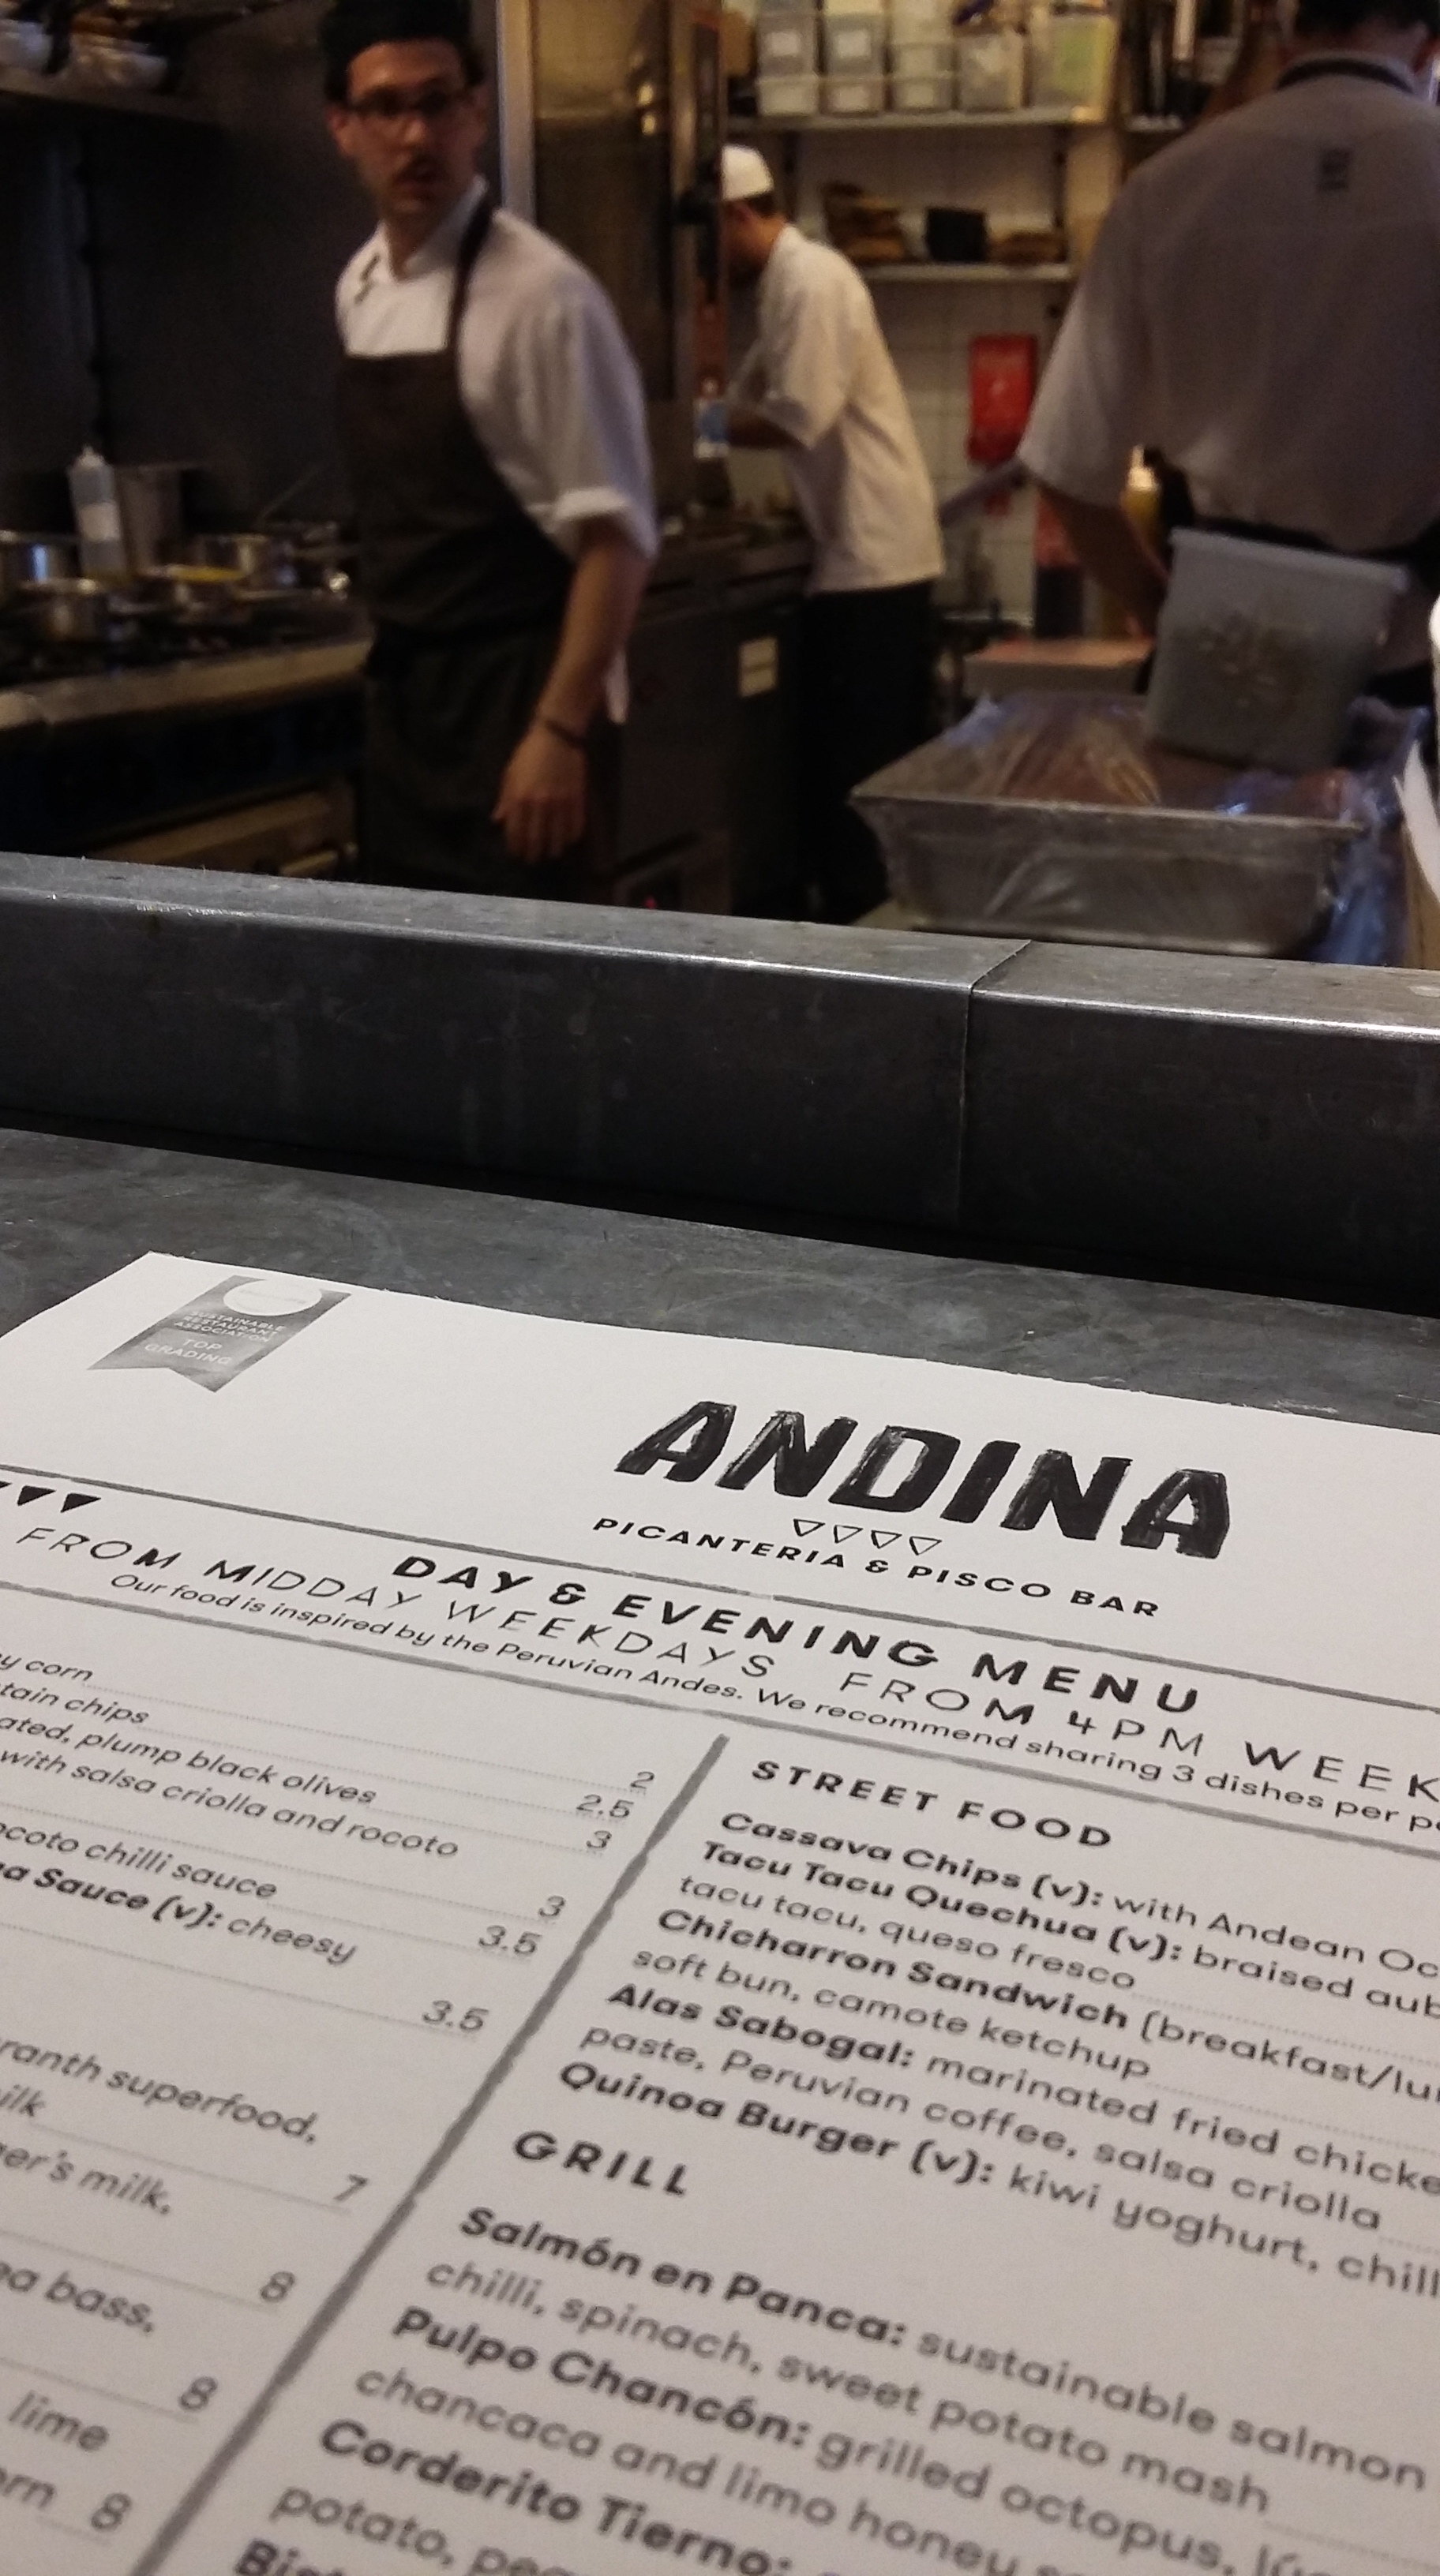 A Peruvian Kitchen called Andina